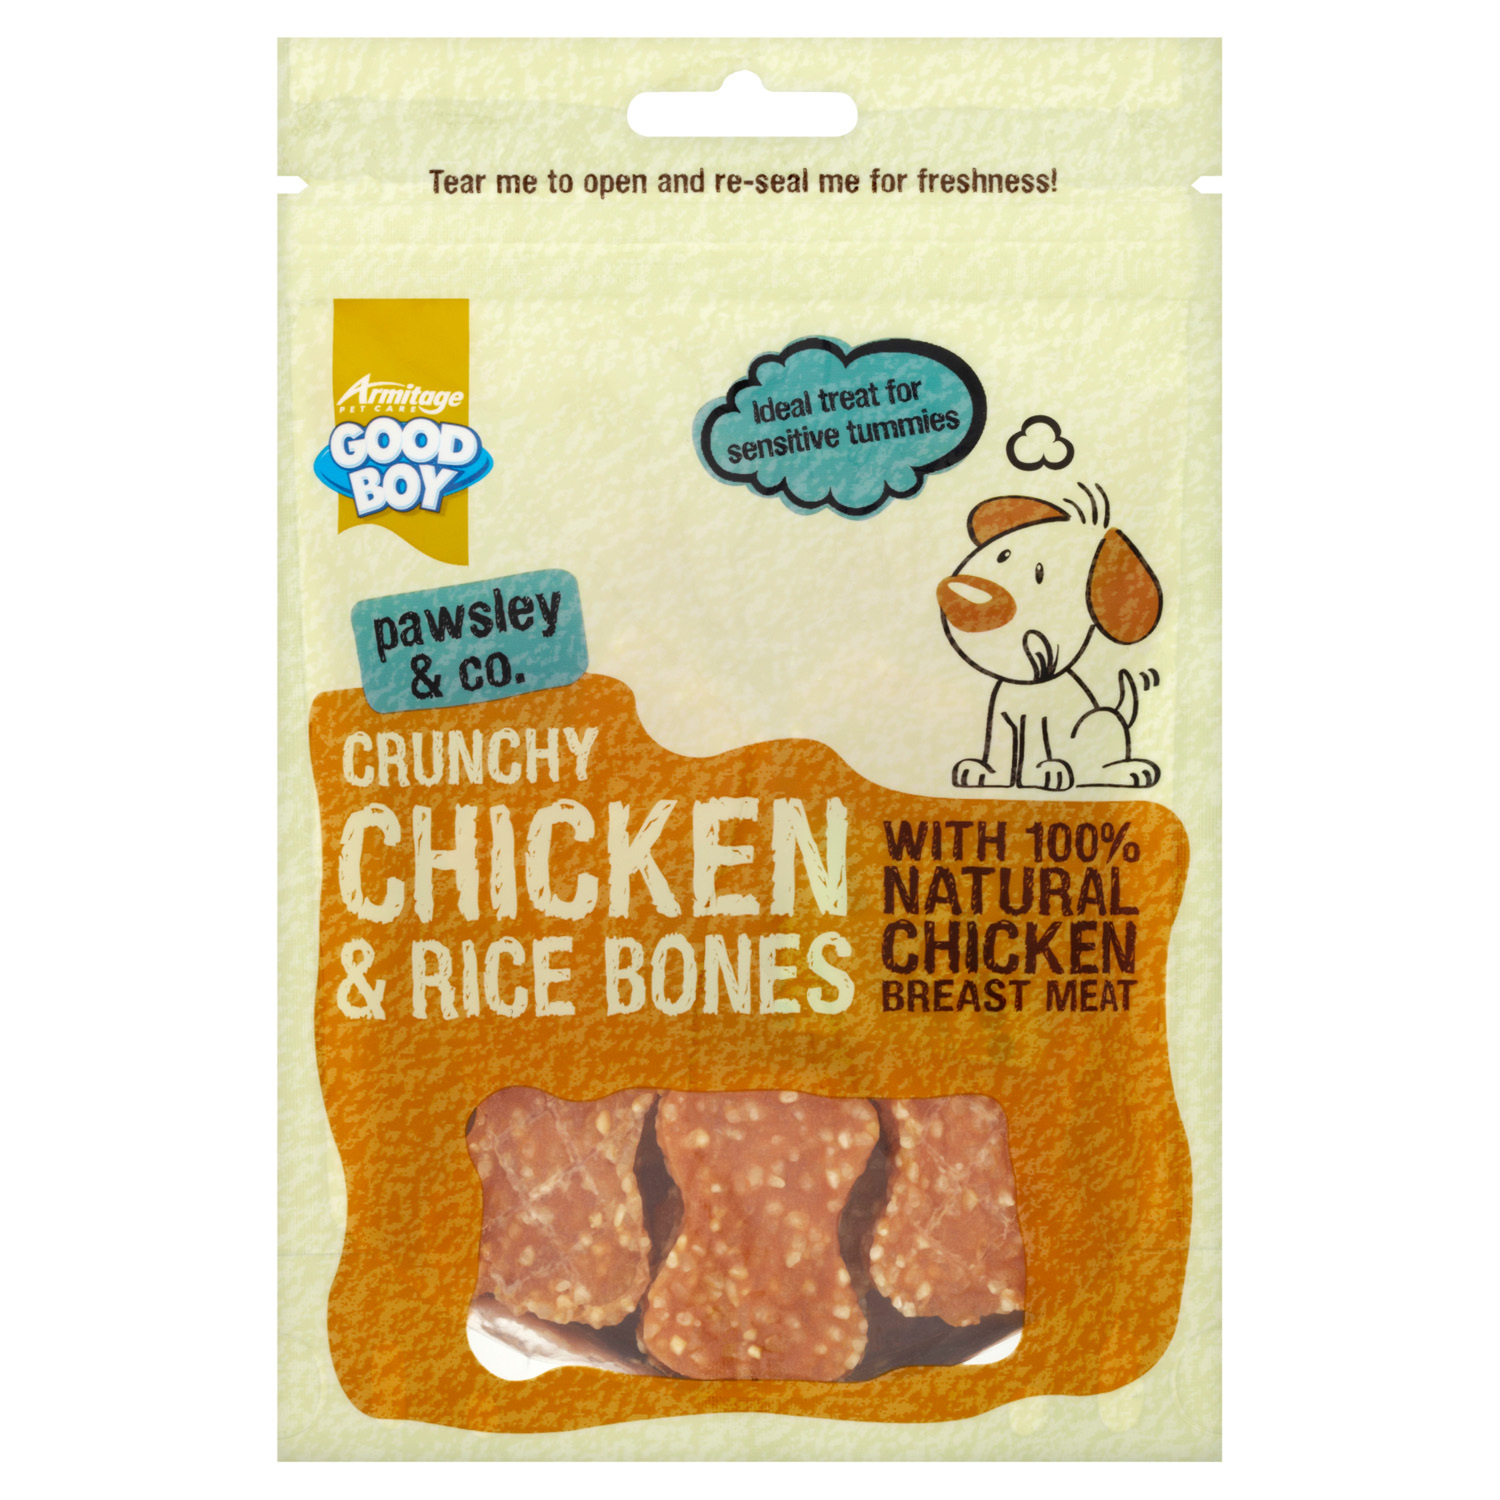 Good Boy Crunchy Chicken and Rice Bones Dog Treats Image